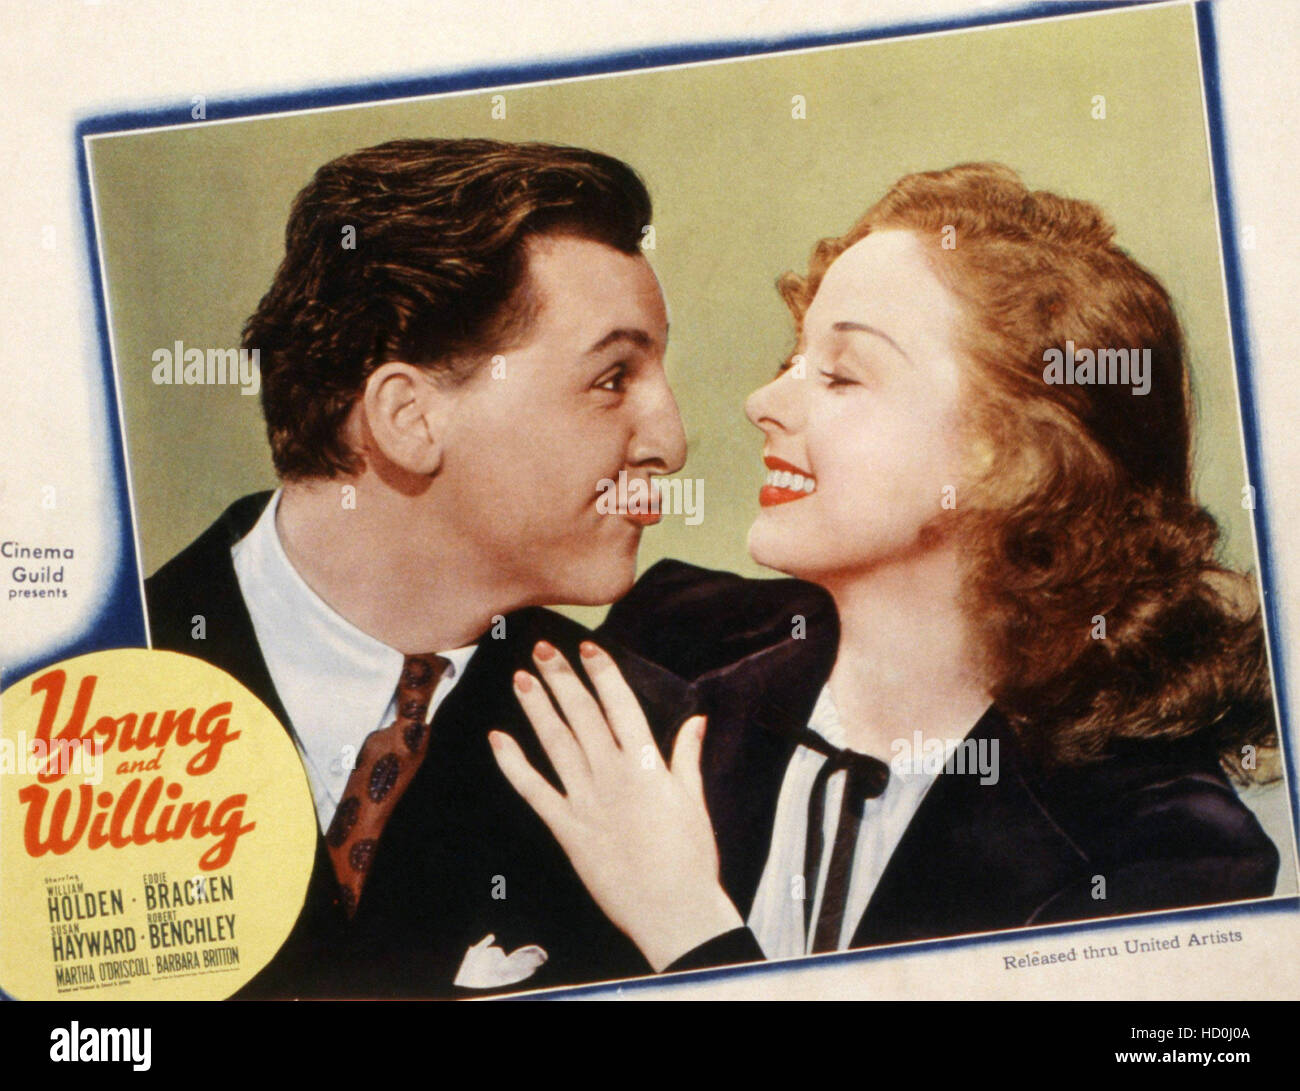 YOUNG AND WILLING, Eddie Bracken, Susan Hayward, 1943 Stock Photo - Alamy